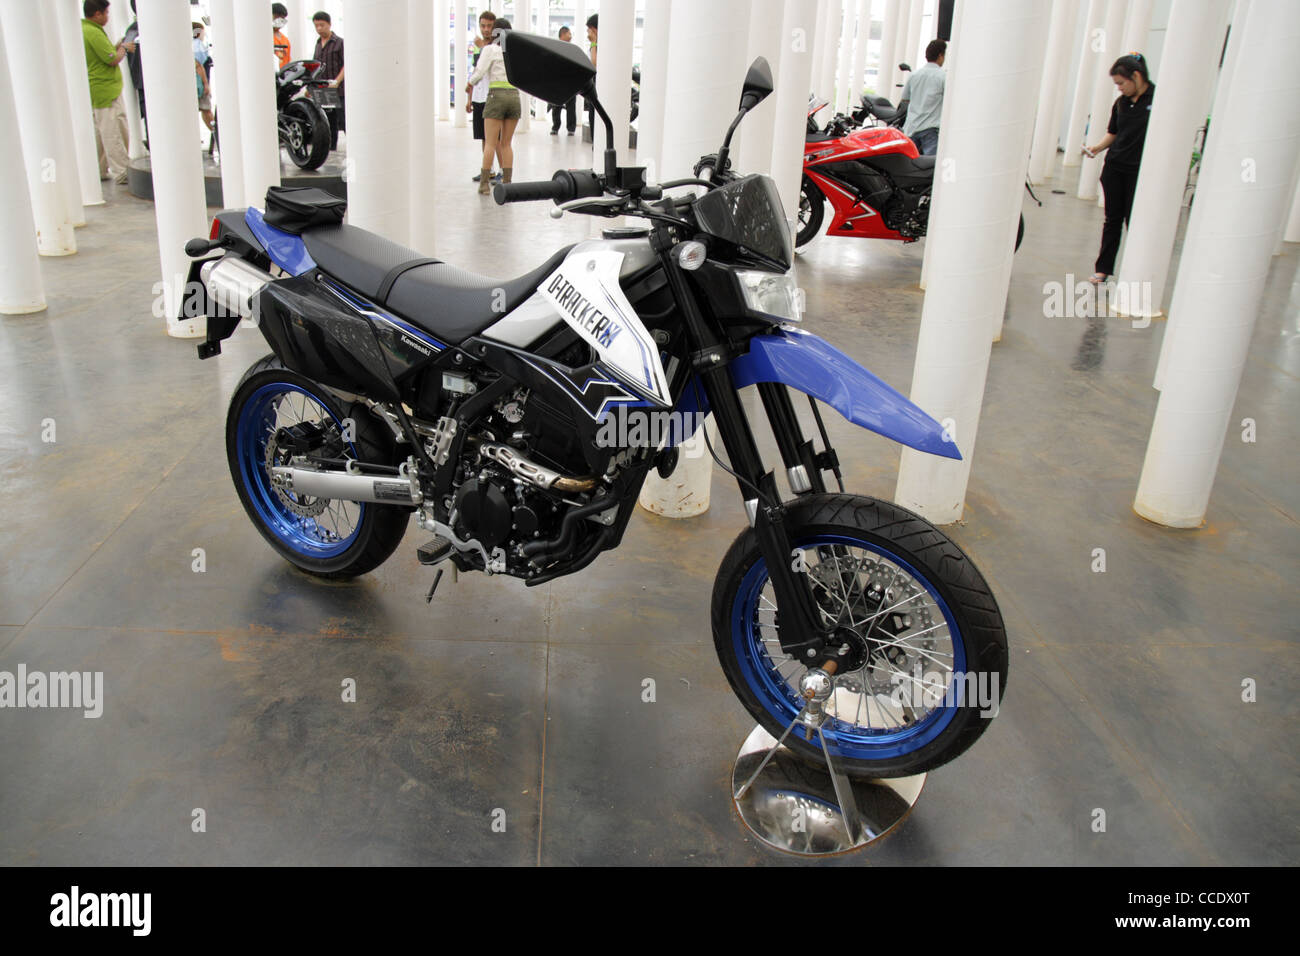 Kawasaki d tracker 250 bike hi-res stock photography and images - Alamy